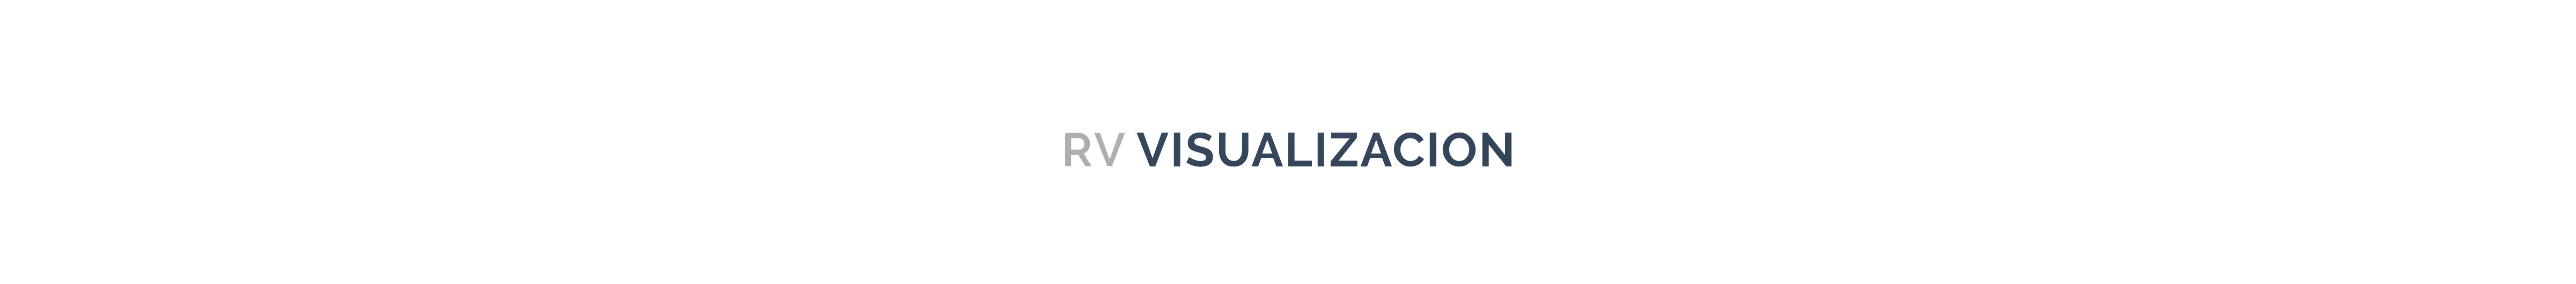 Baner profilu użytkownika RV Visualización